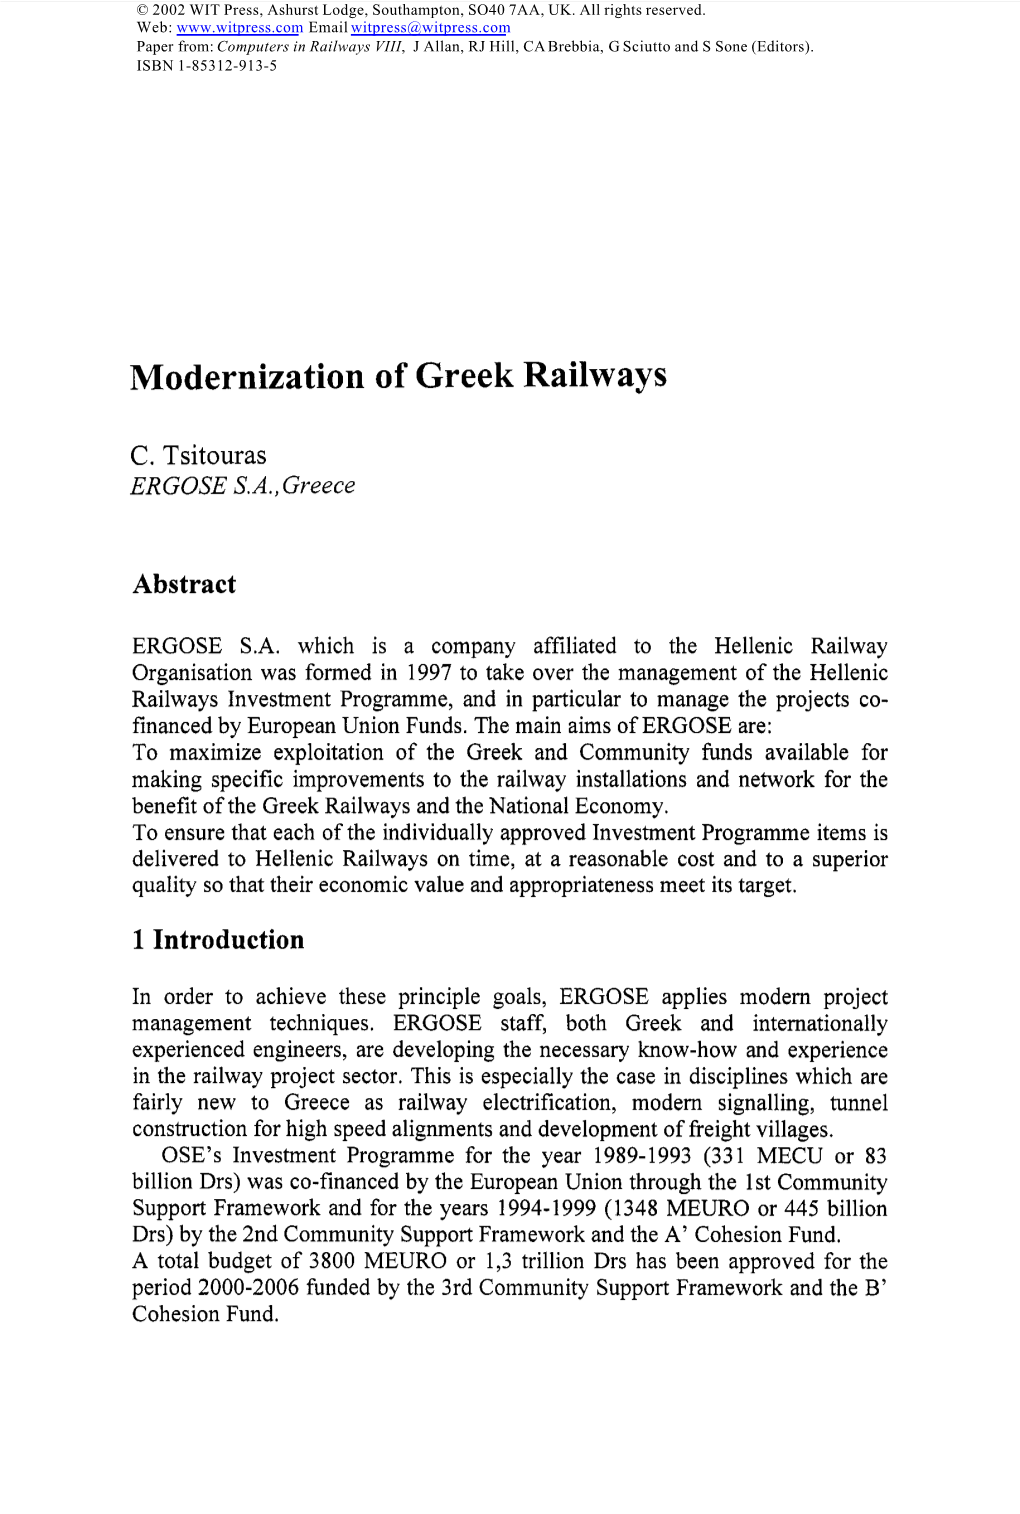 Modernization of Greek Railways